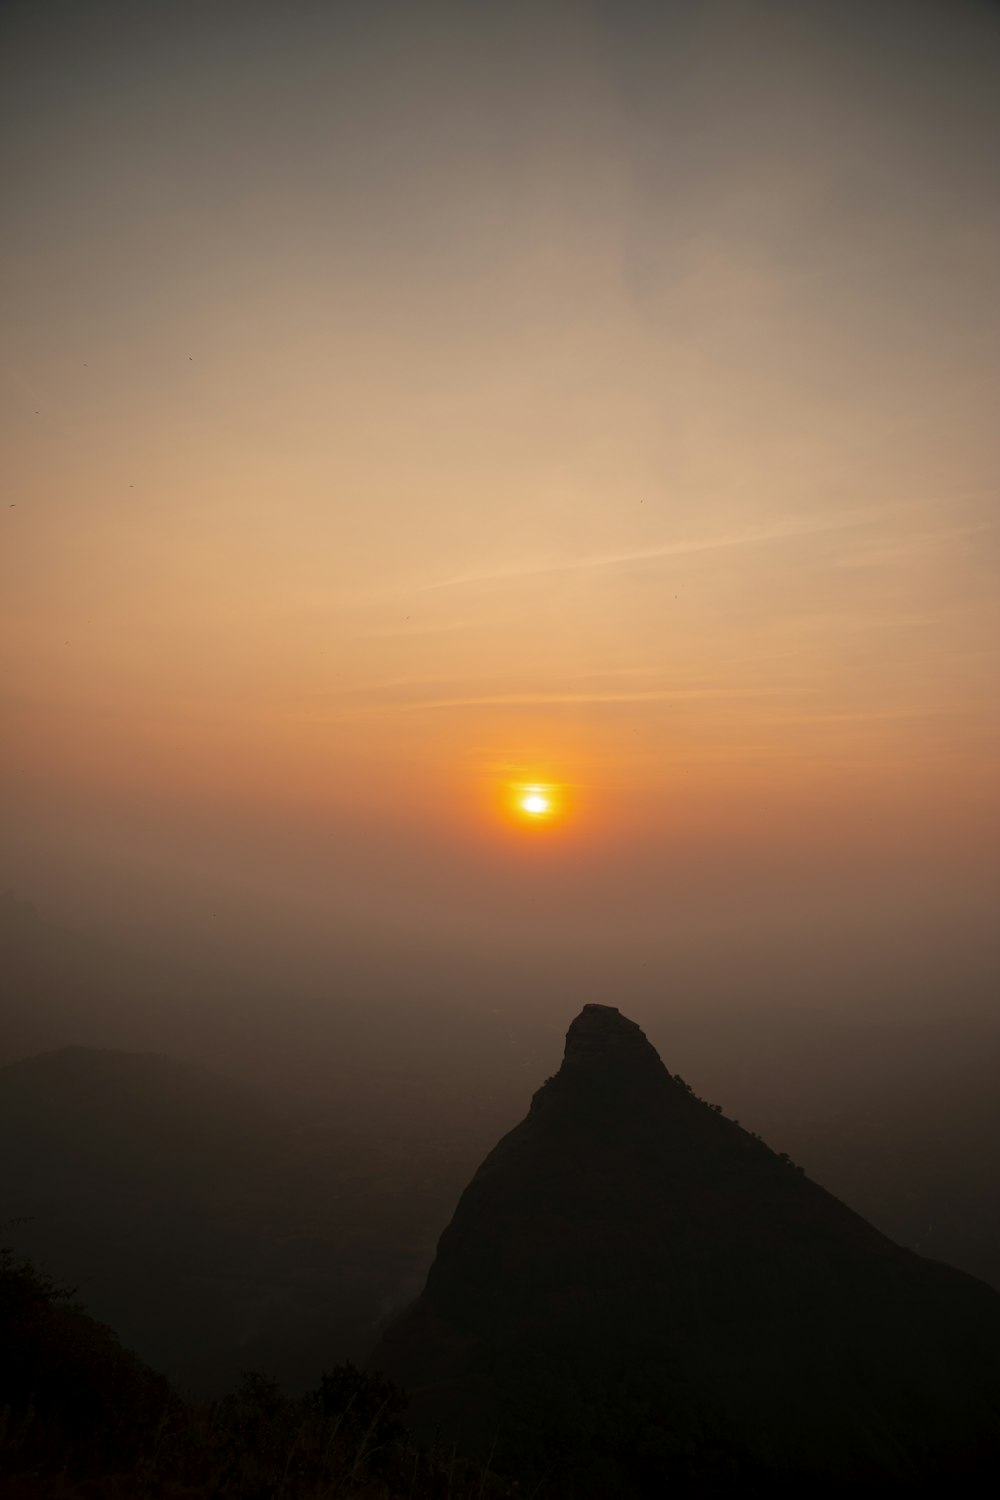 the sun is setting on a foggy mountain